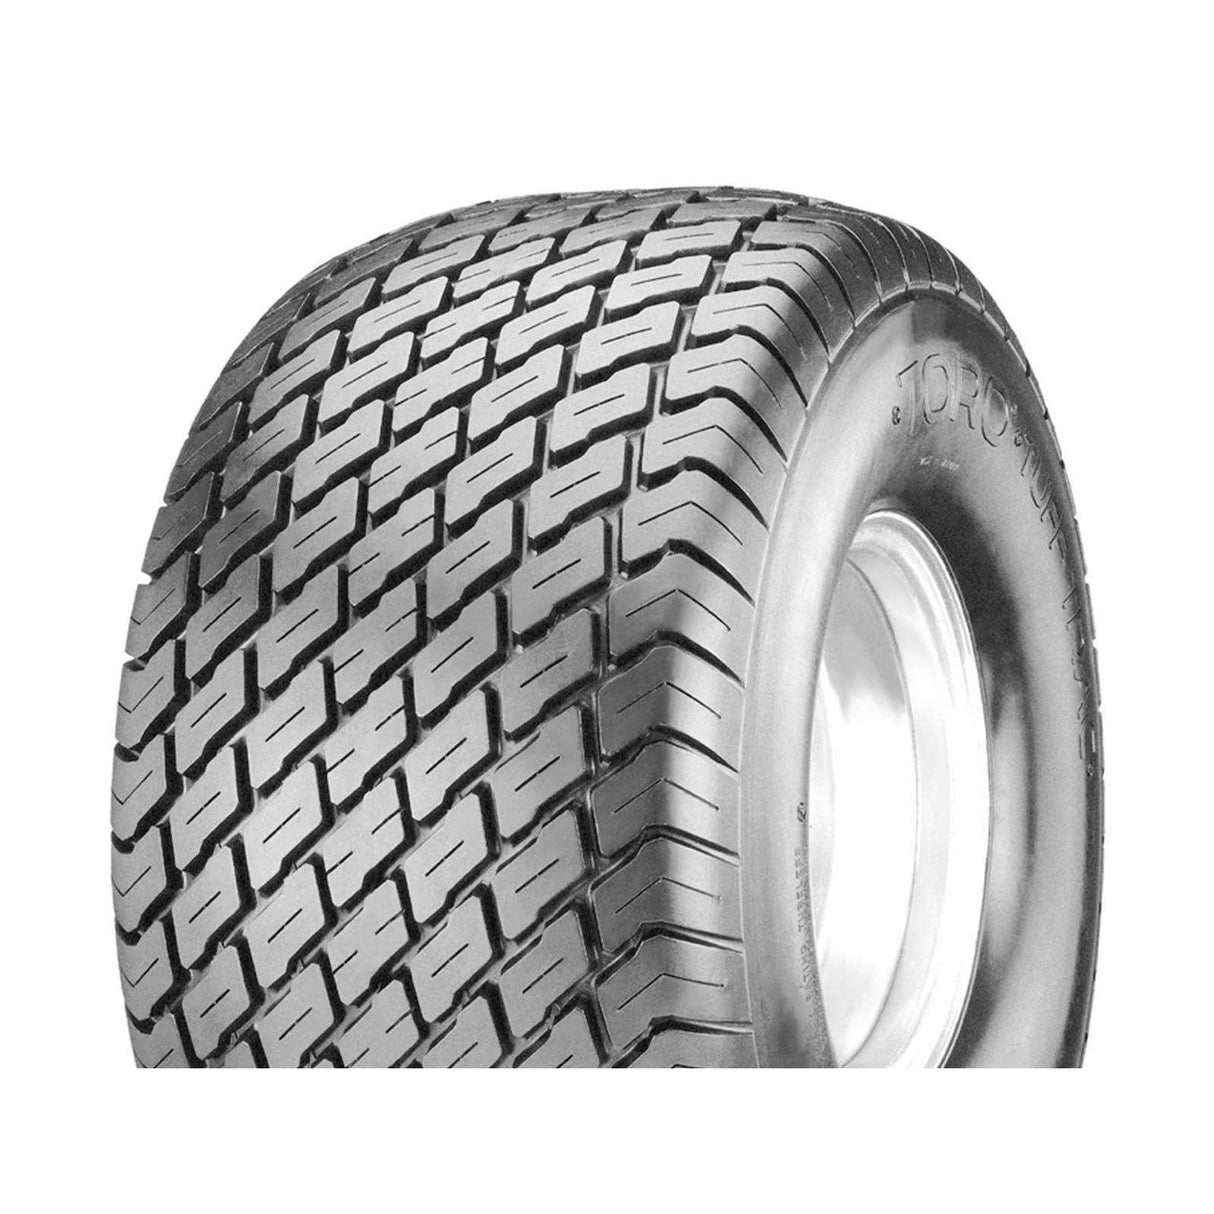 22x9.50-10 K506 (4 PLY) Kenda Turf Tyre